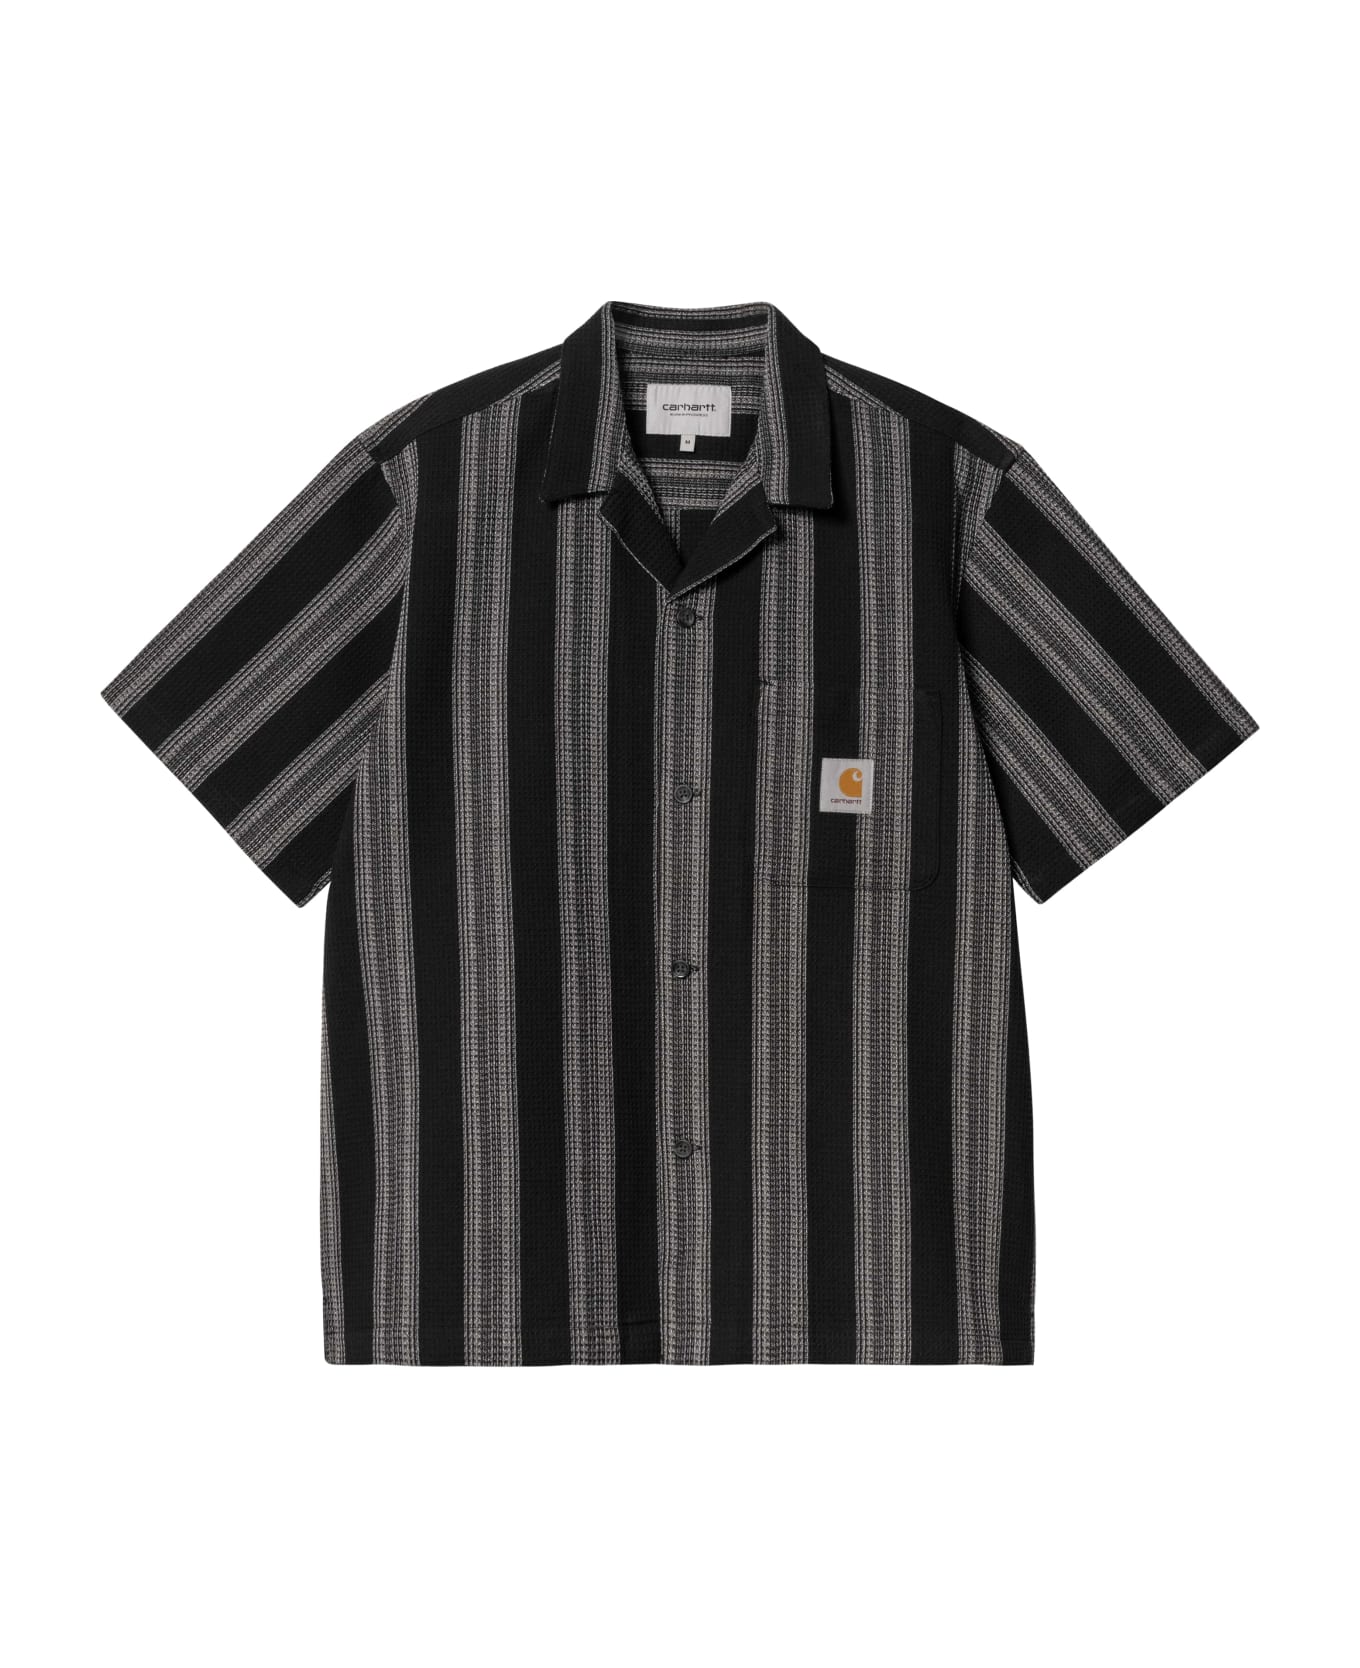 Carhartt S/s Dodson Shirt - Xx Dodson Stripe, Black